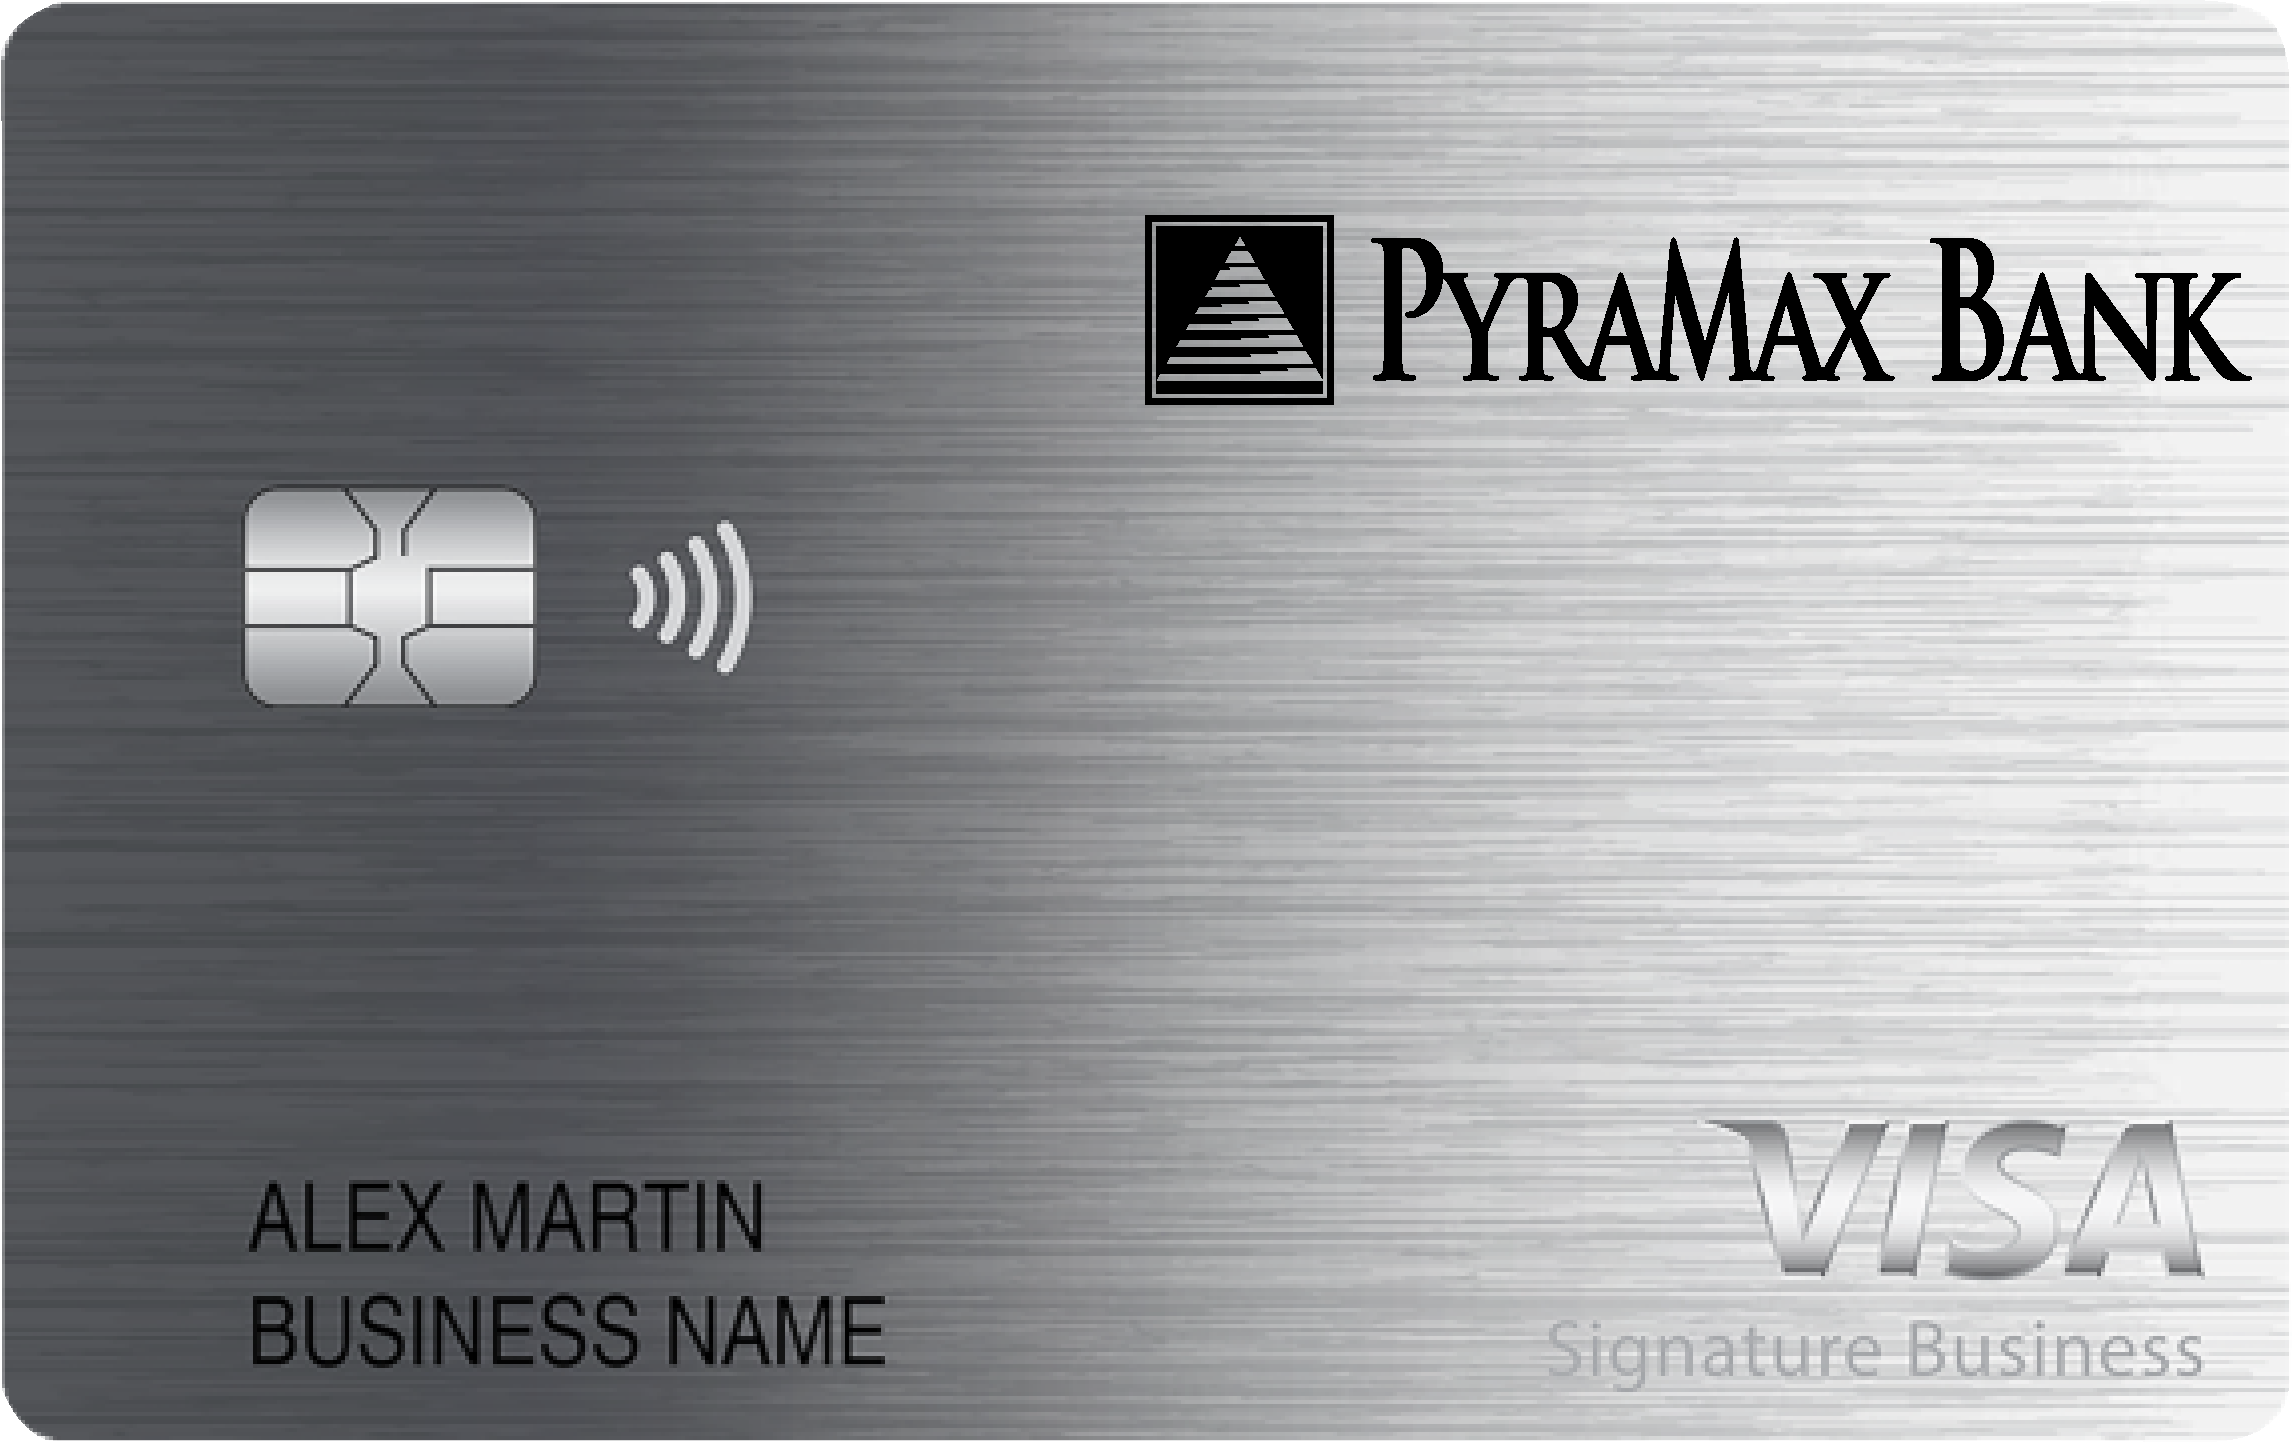 PyraMax Bank Smart Business Rewards Card